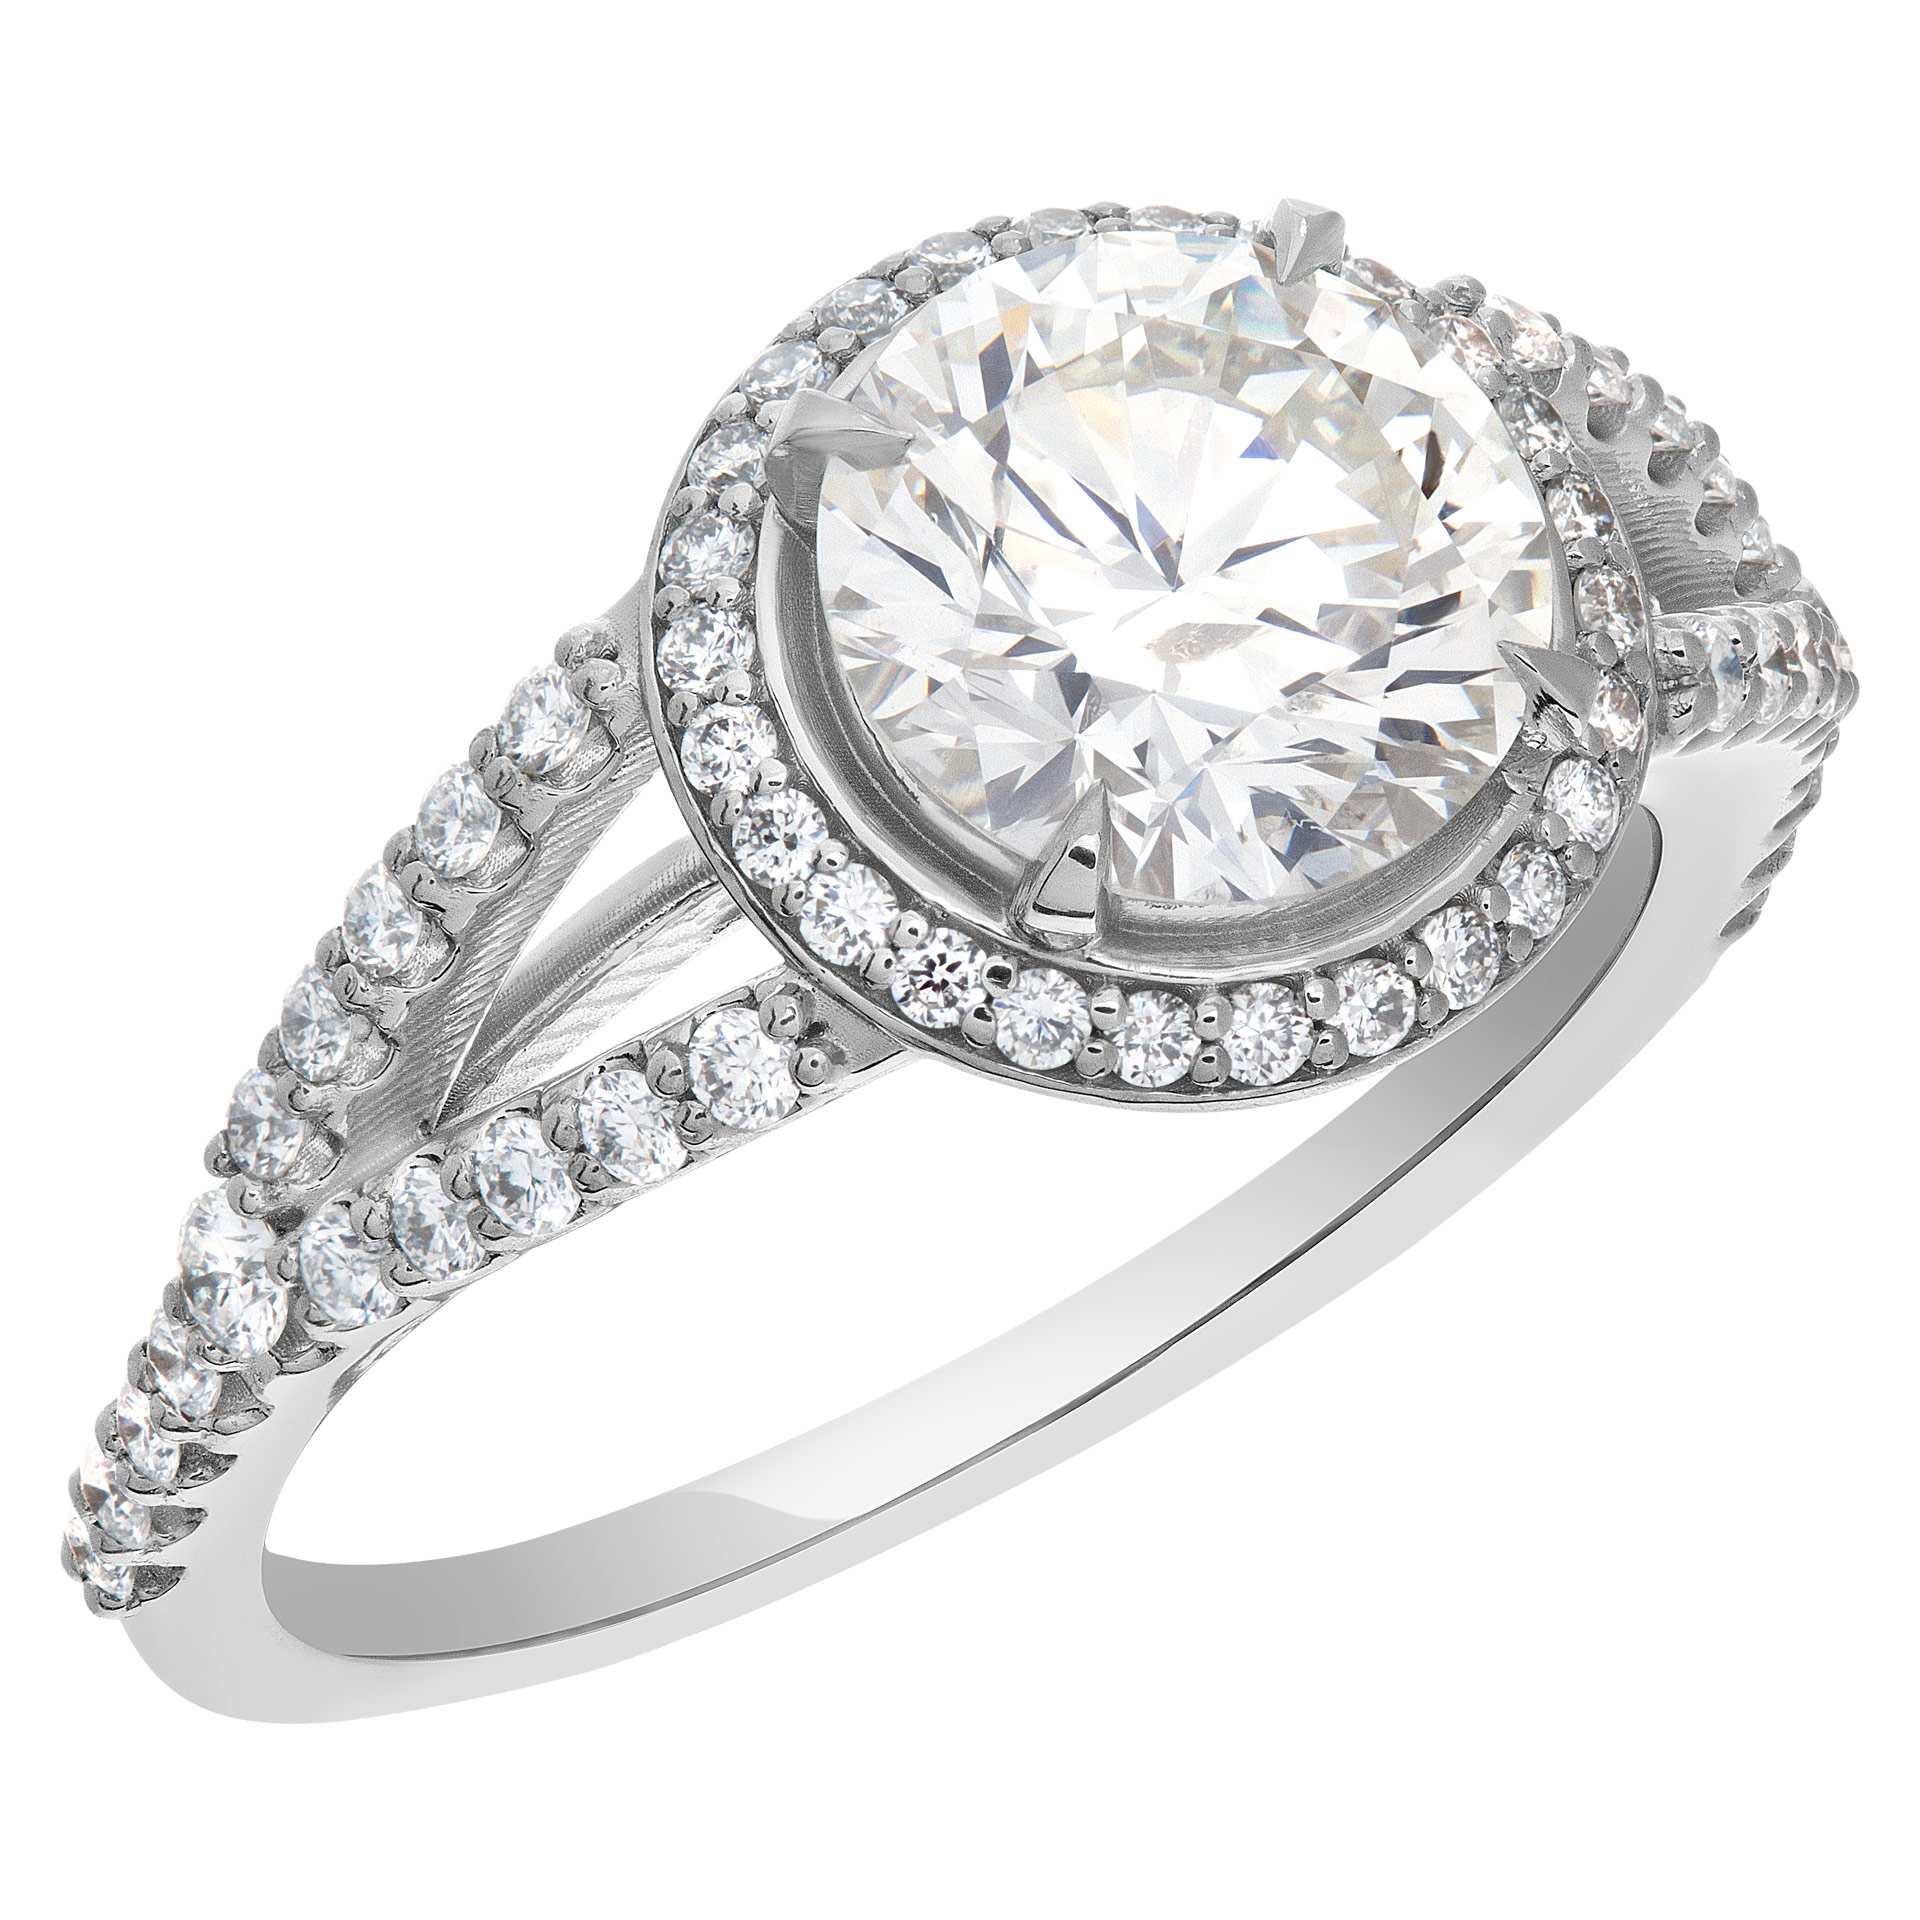 GIA cerified round brilliant cut diamond 1.81 carat (J color, SI2 clarity, Excellent symmetry) ring image 2